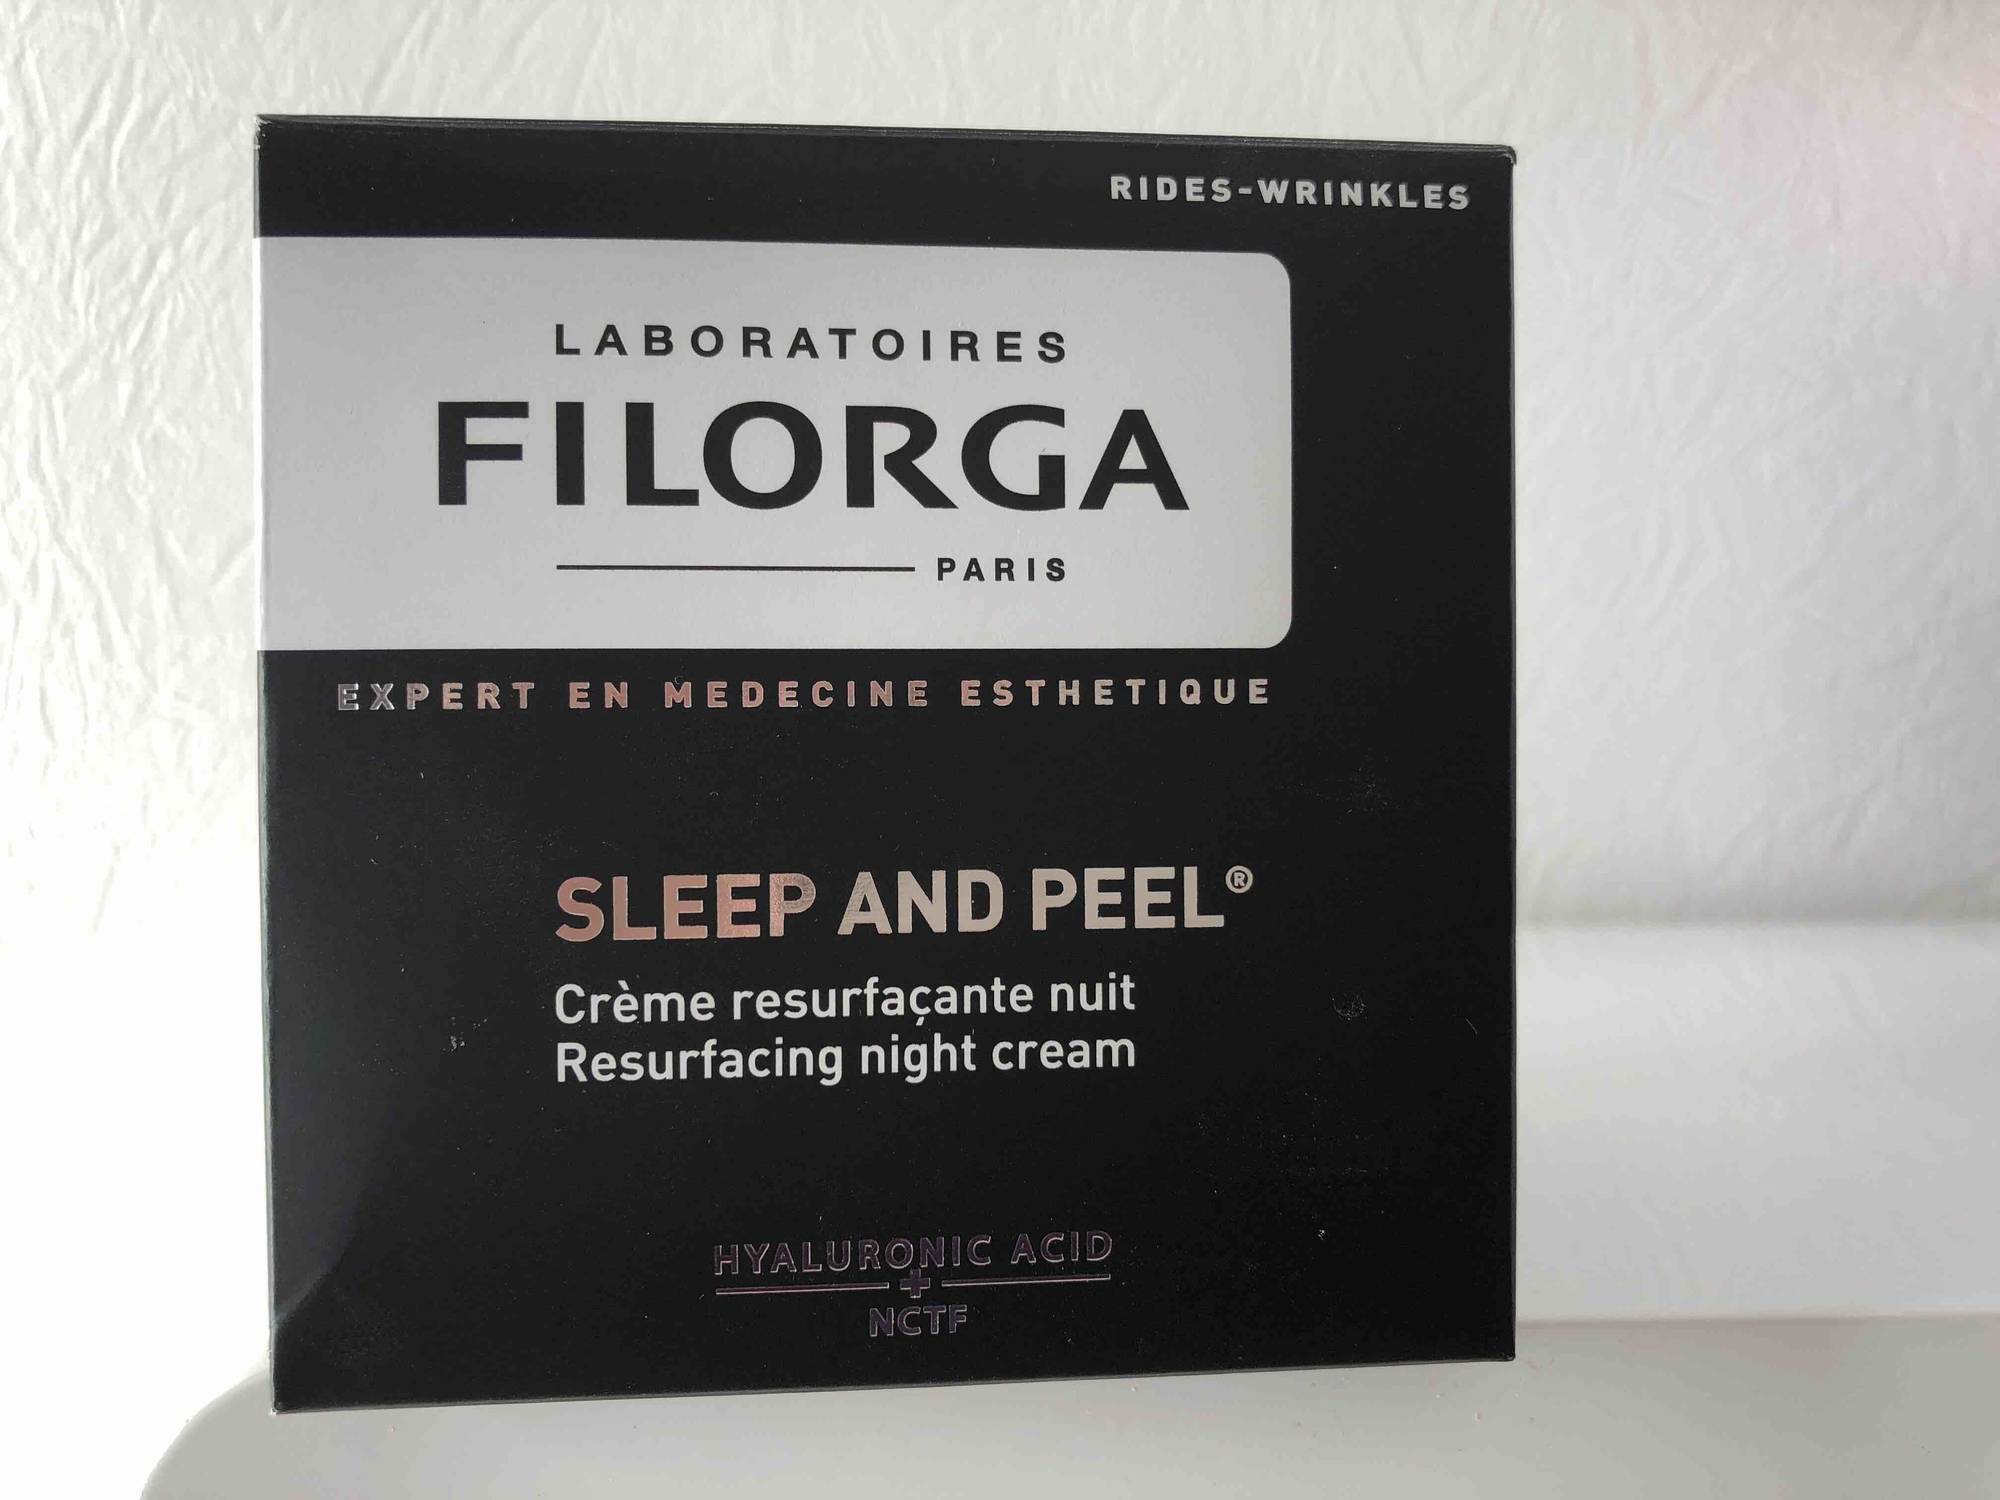 FILORGIA - Sleep and peel - Crème resurfaçante nuit